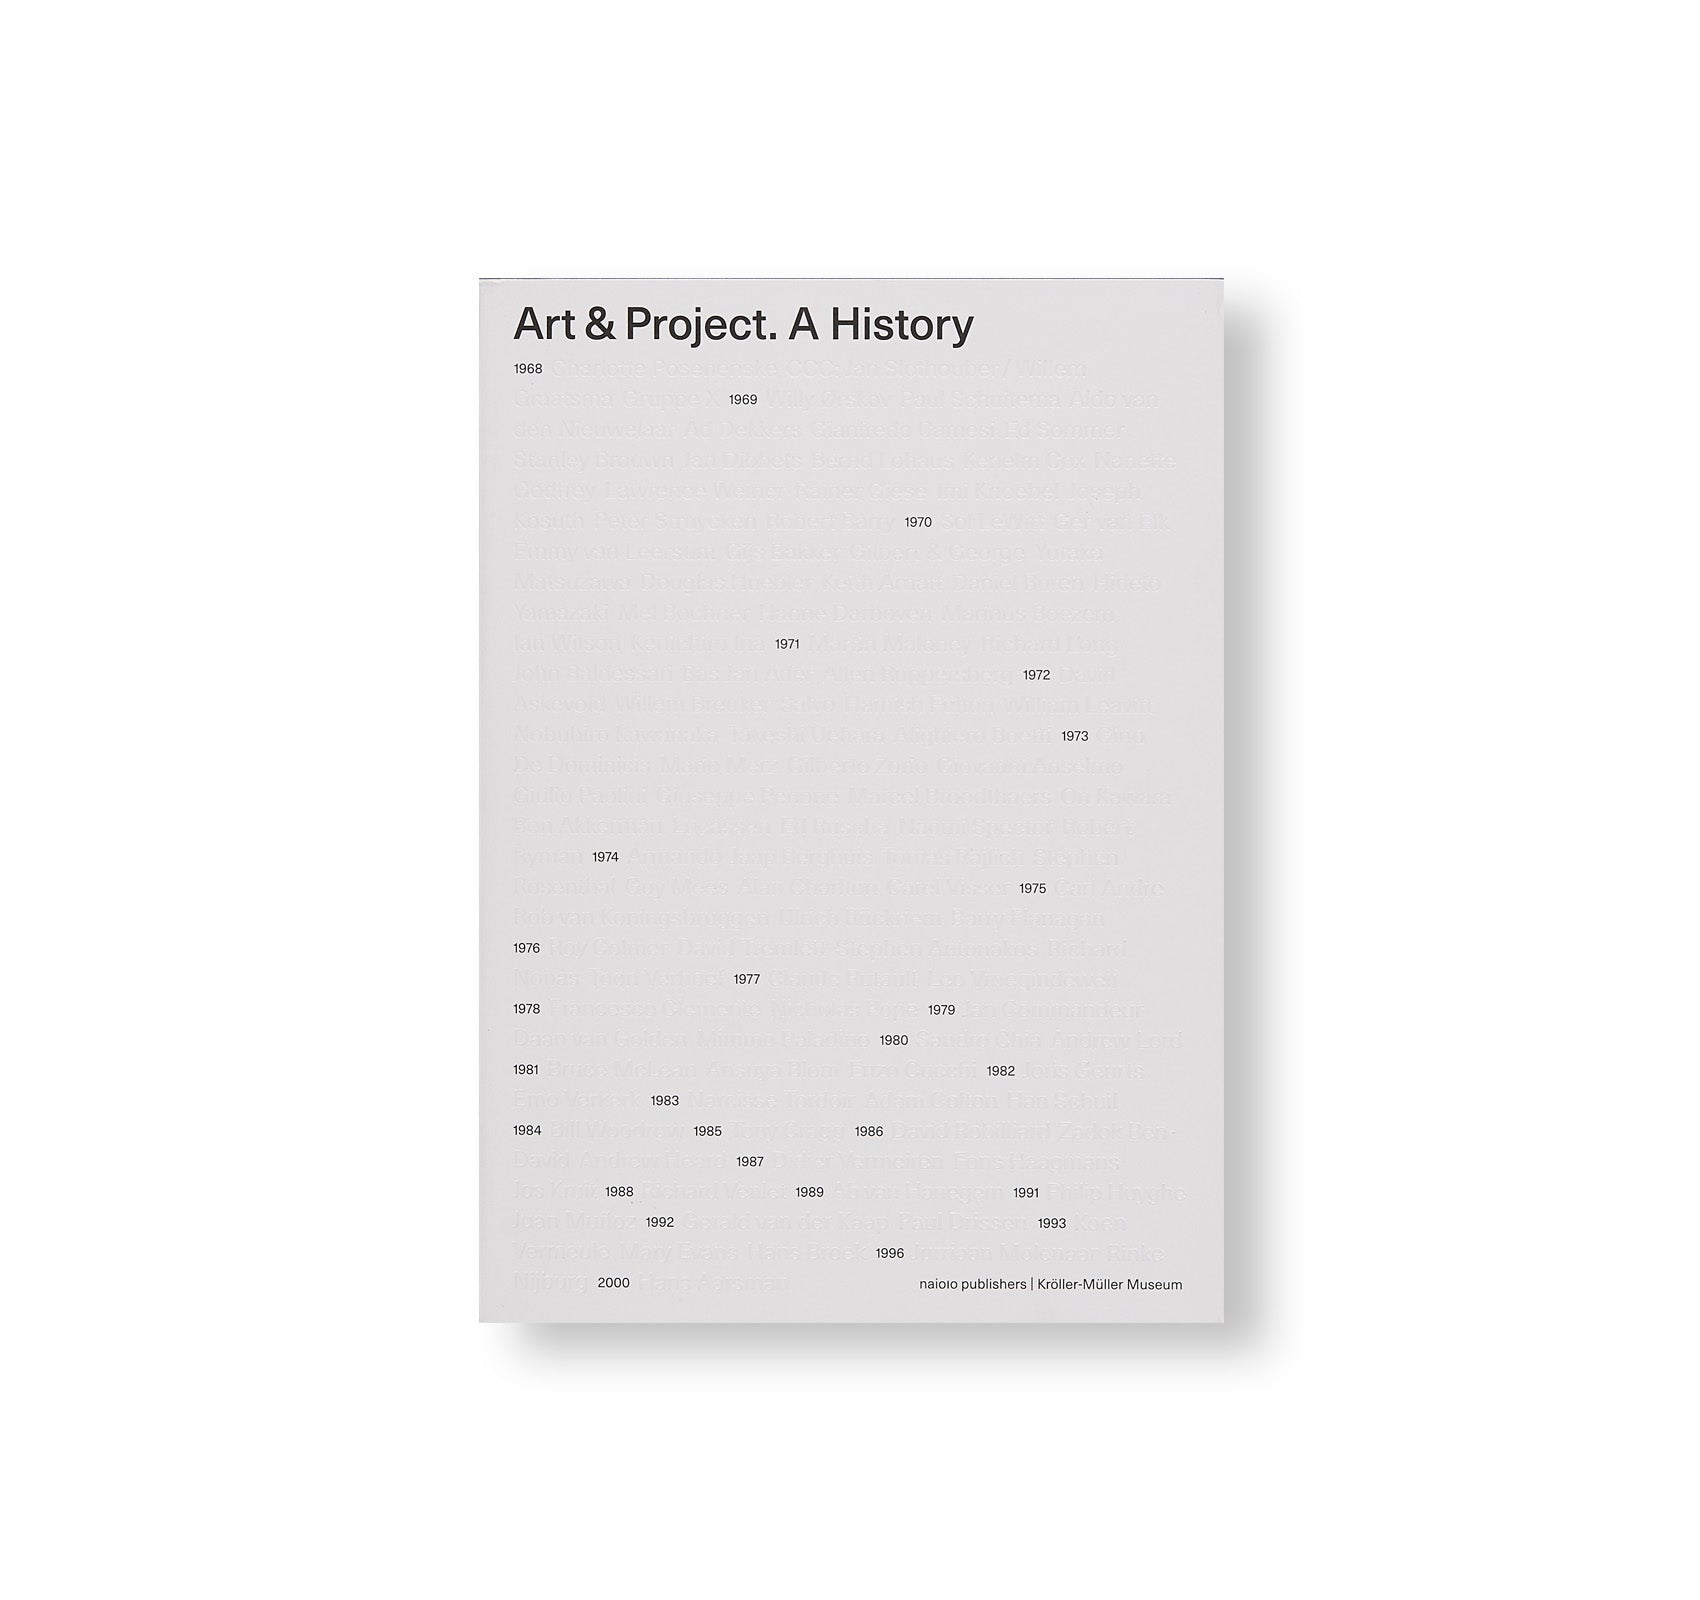 ART & PROJECT A HISTORY